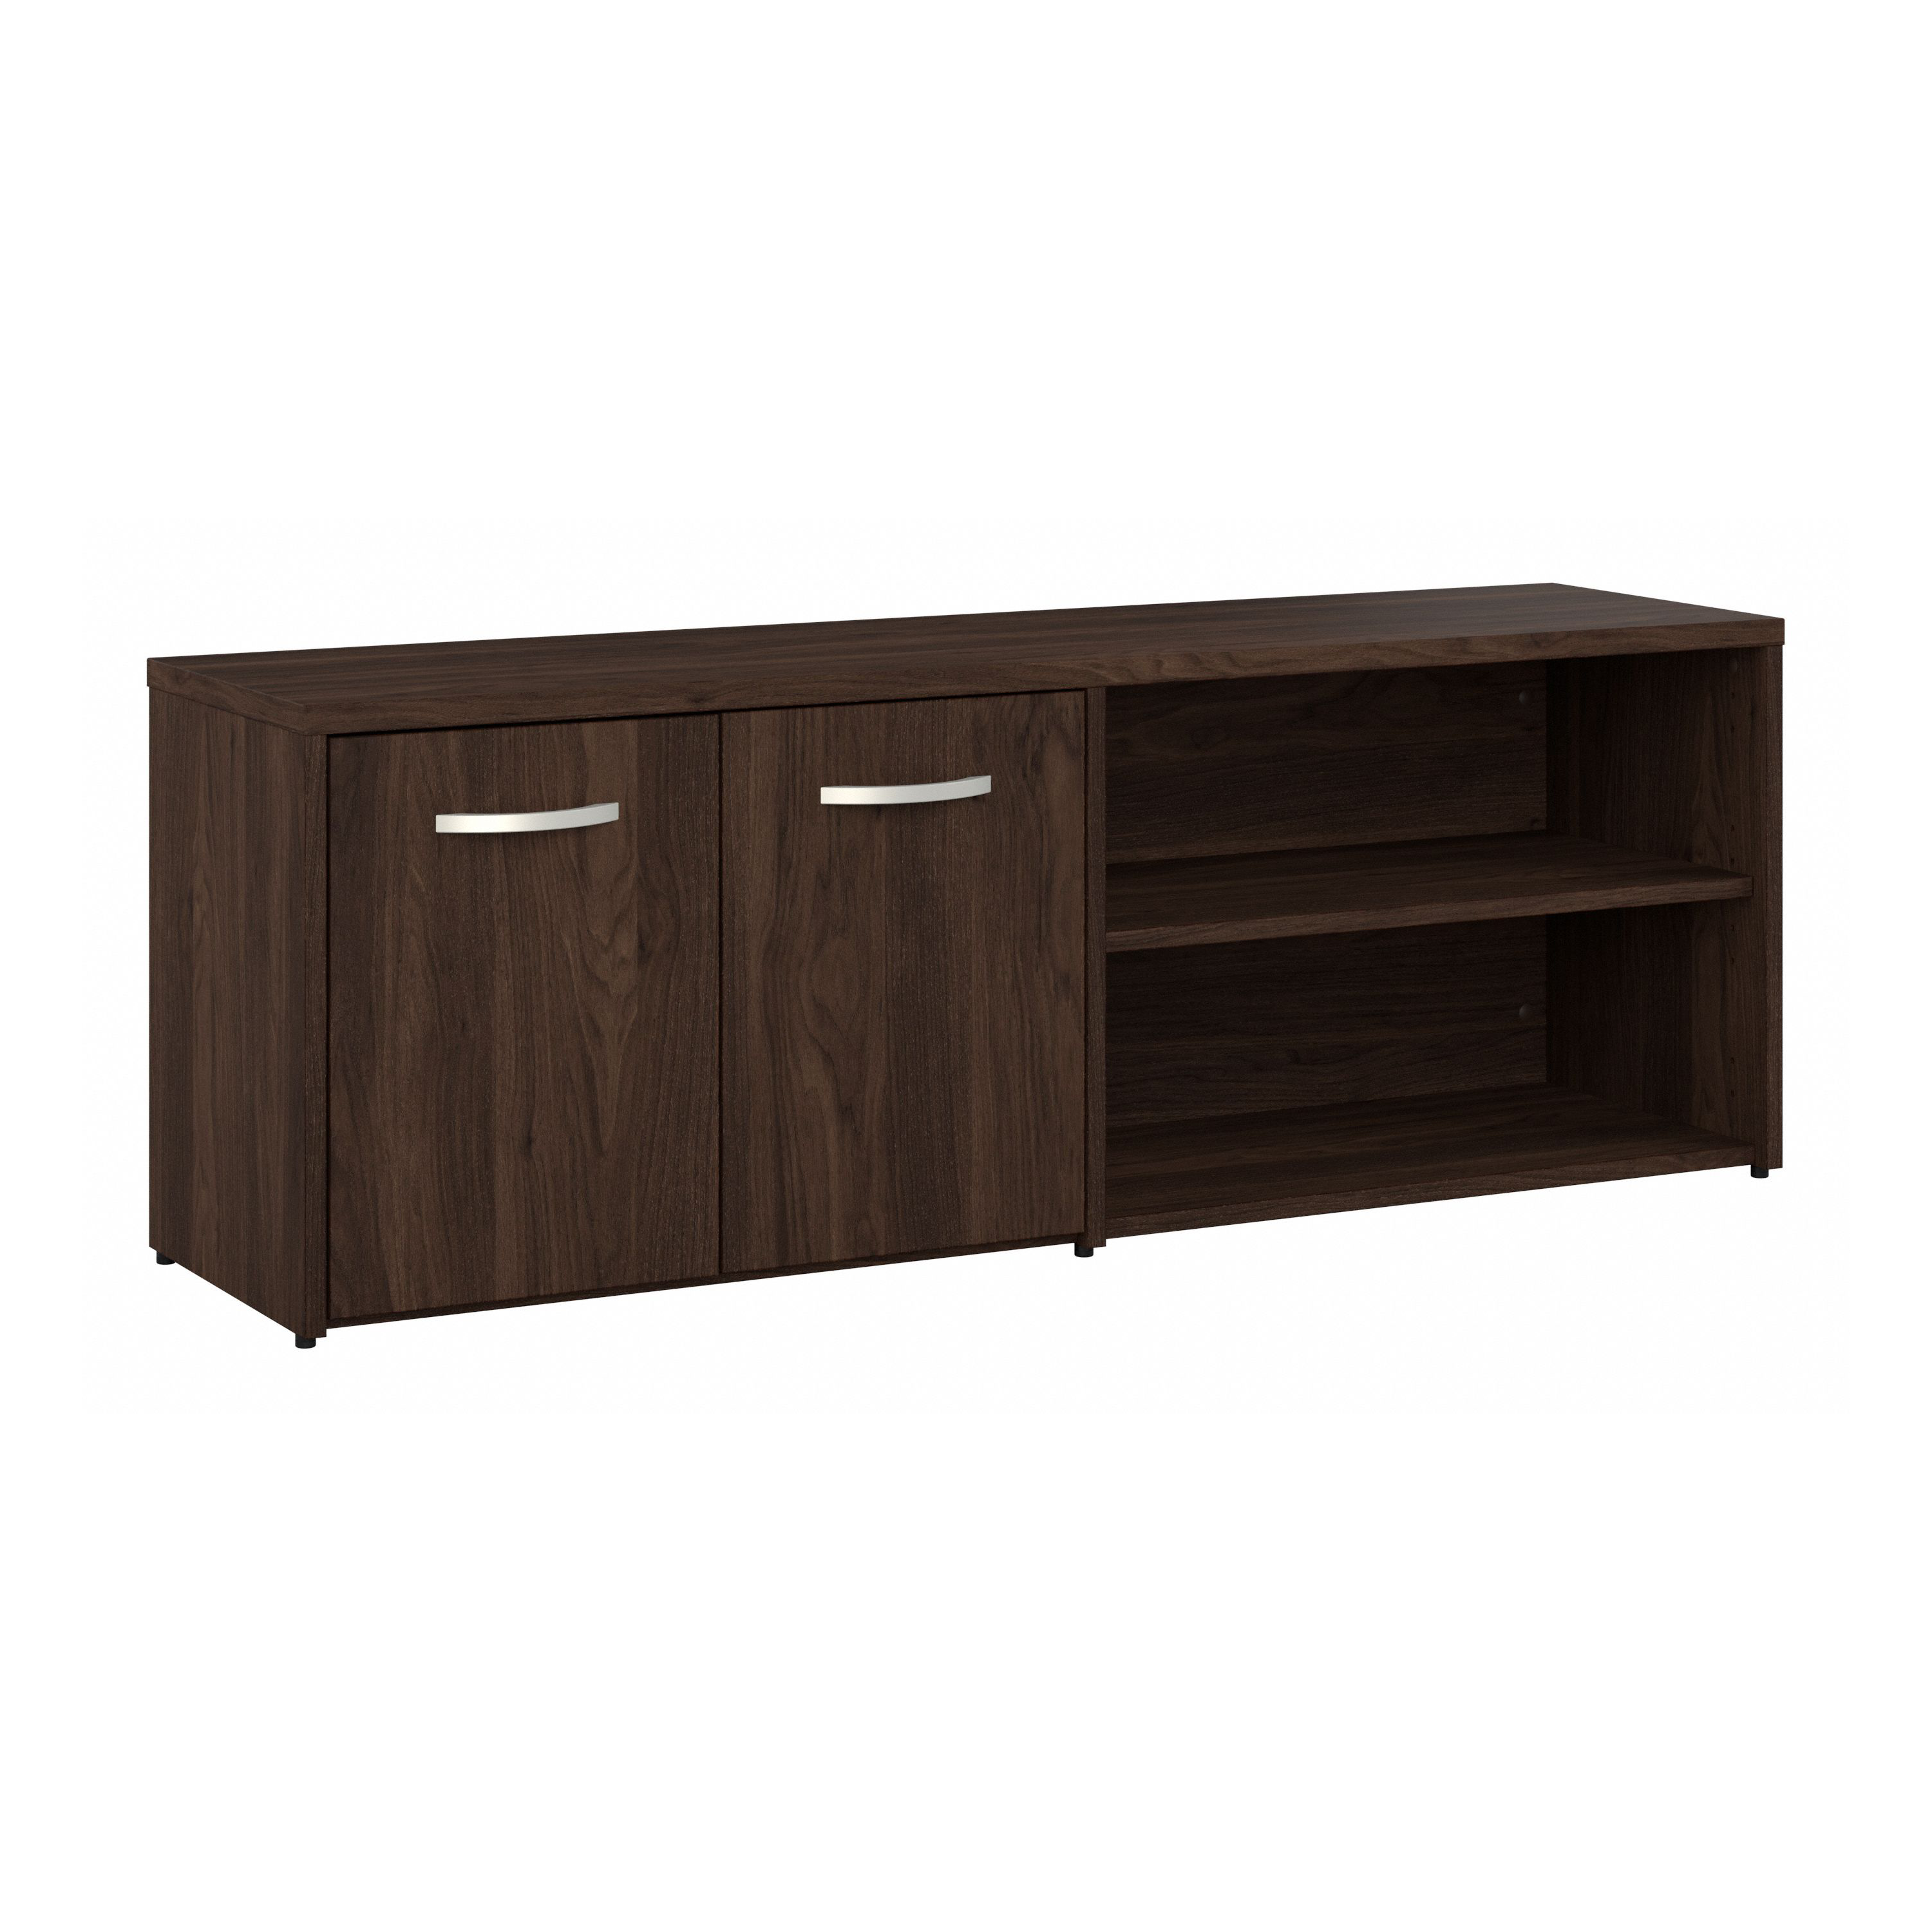 Shop Bush Business Furniture Studio C Low Storage Cabinet with Doors and Shelves 02 SCS160BW #color_black walnut